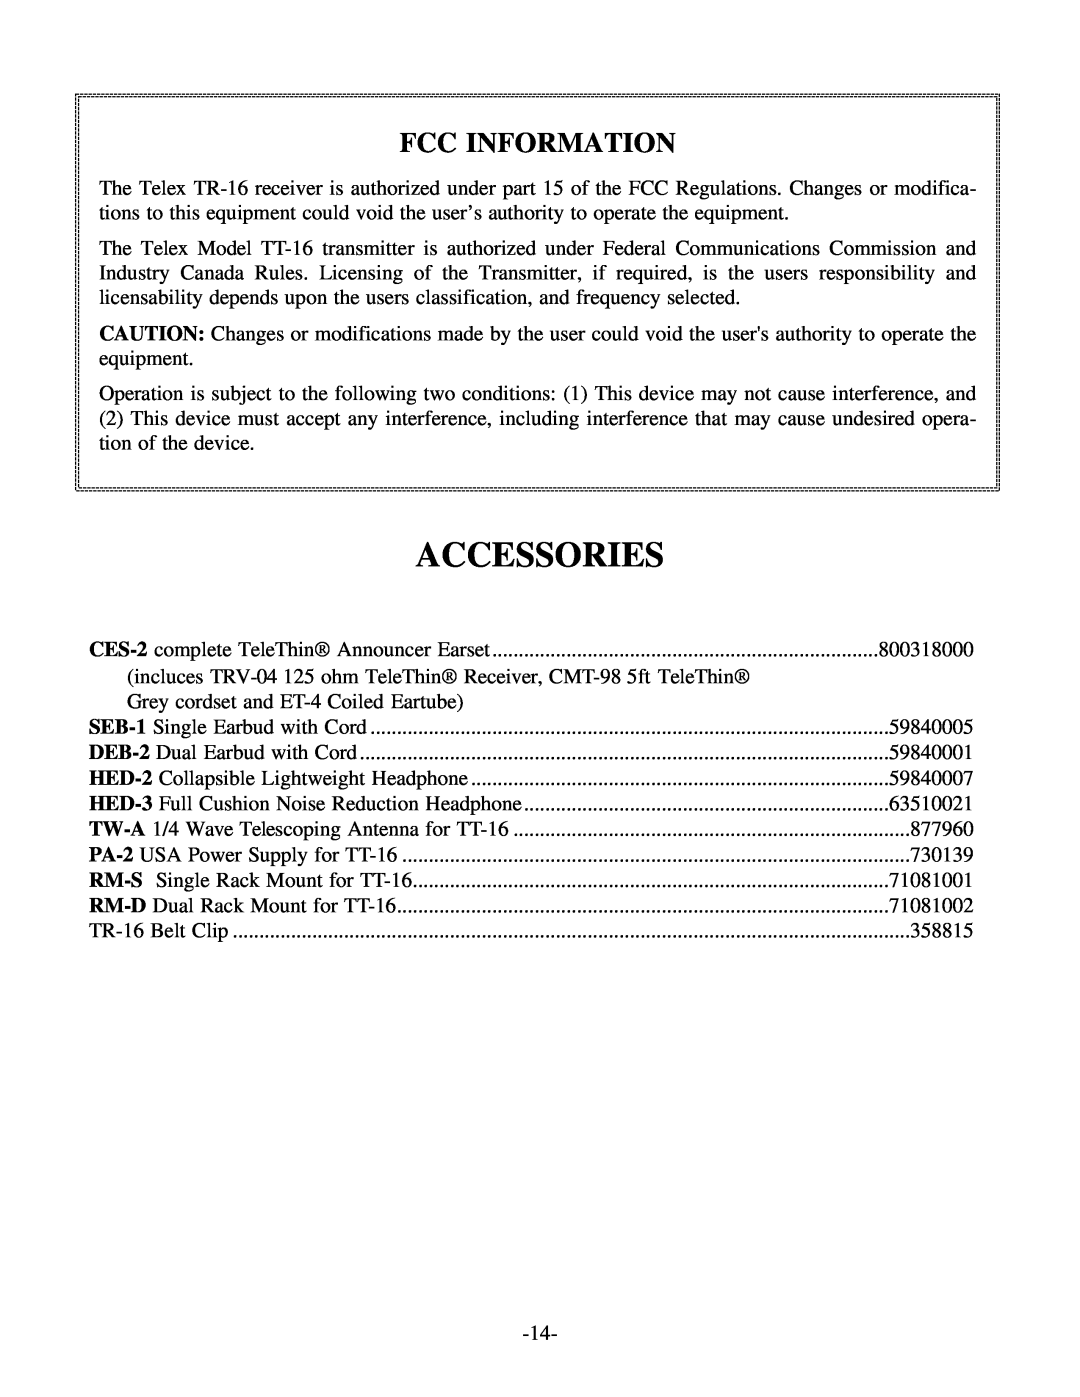 Telex TR-16, TT-16 manual Accessories, Fcc Information 